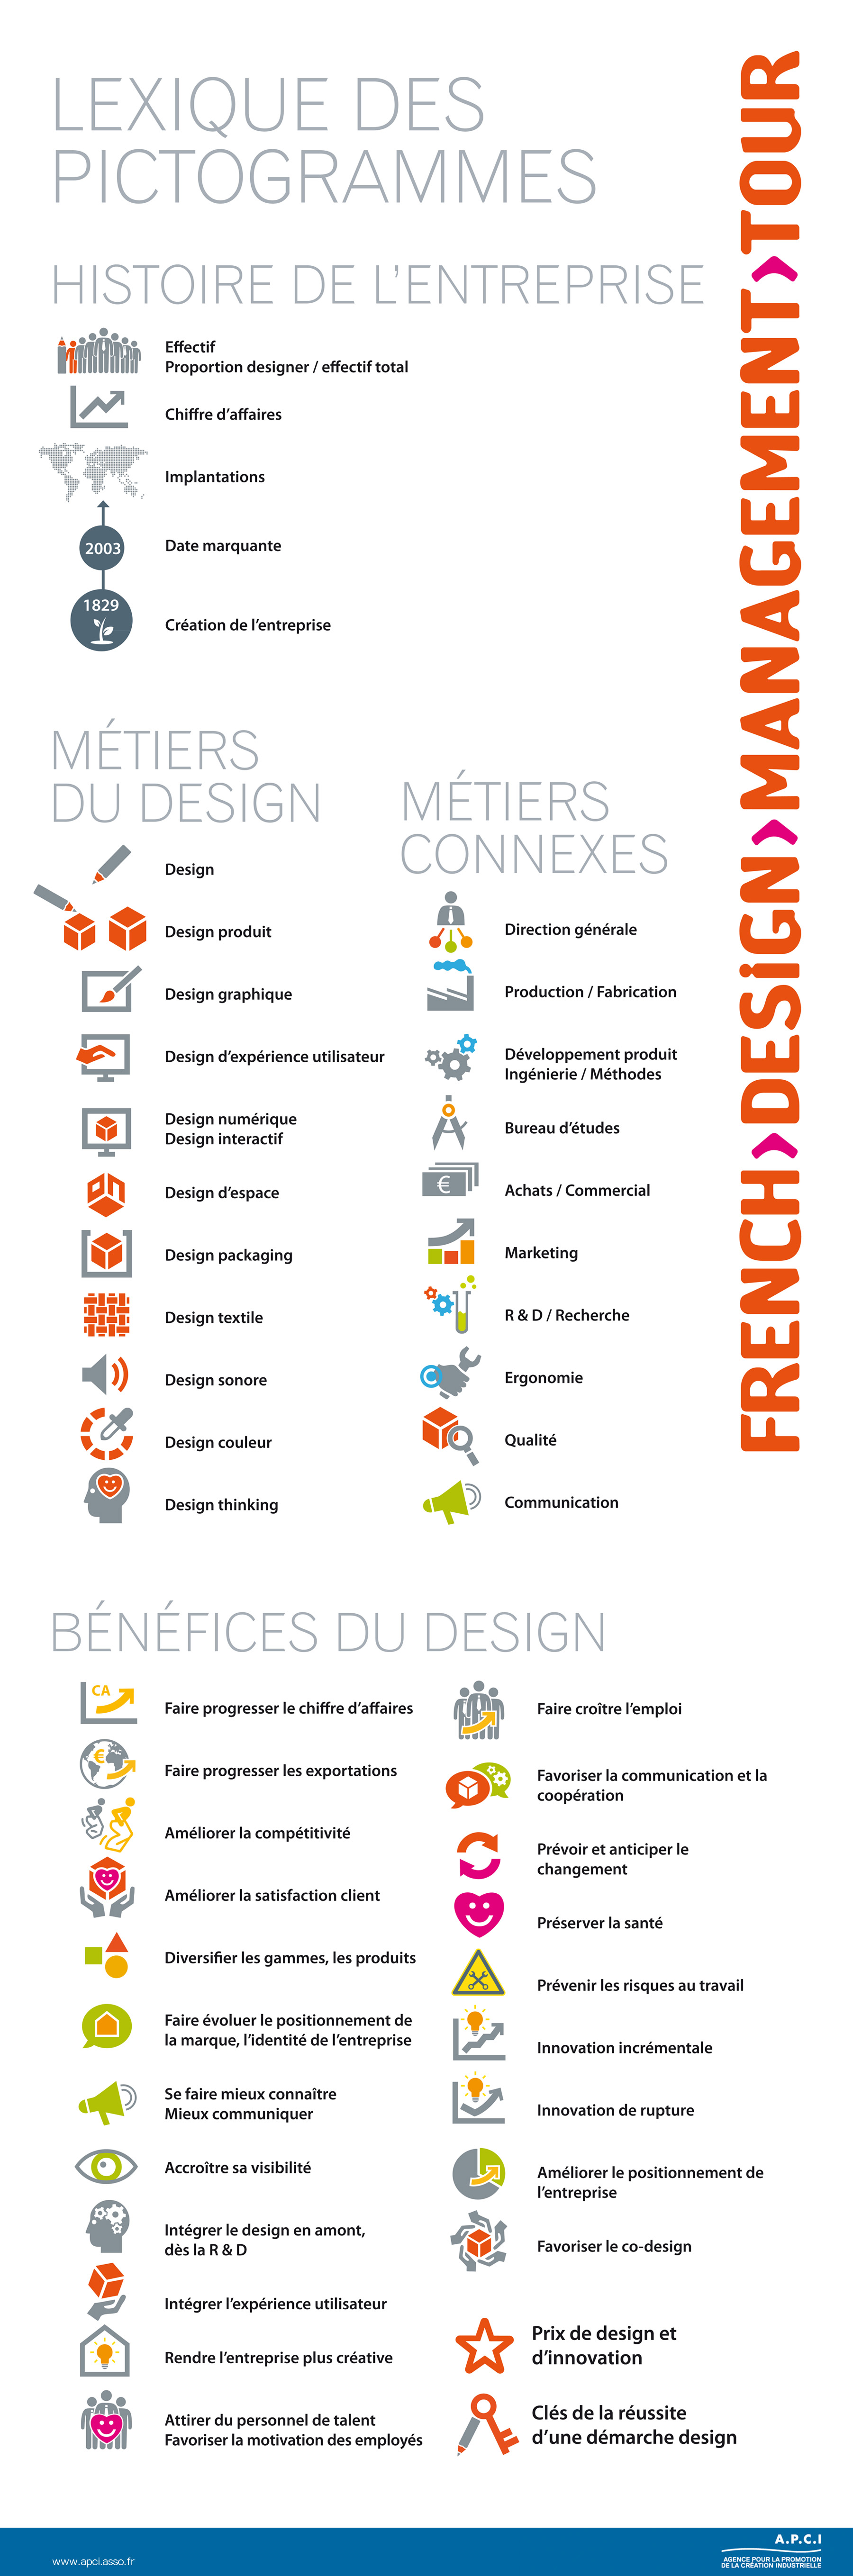 French Design Management Tour - Pictogrammes